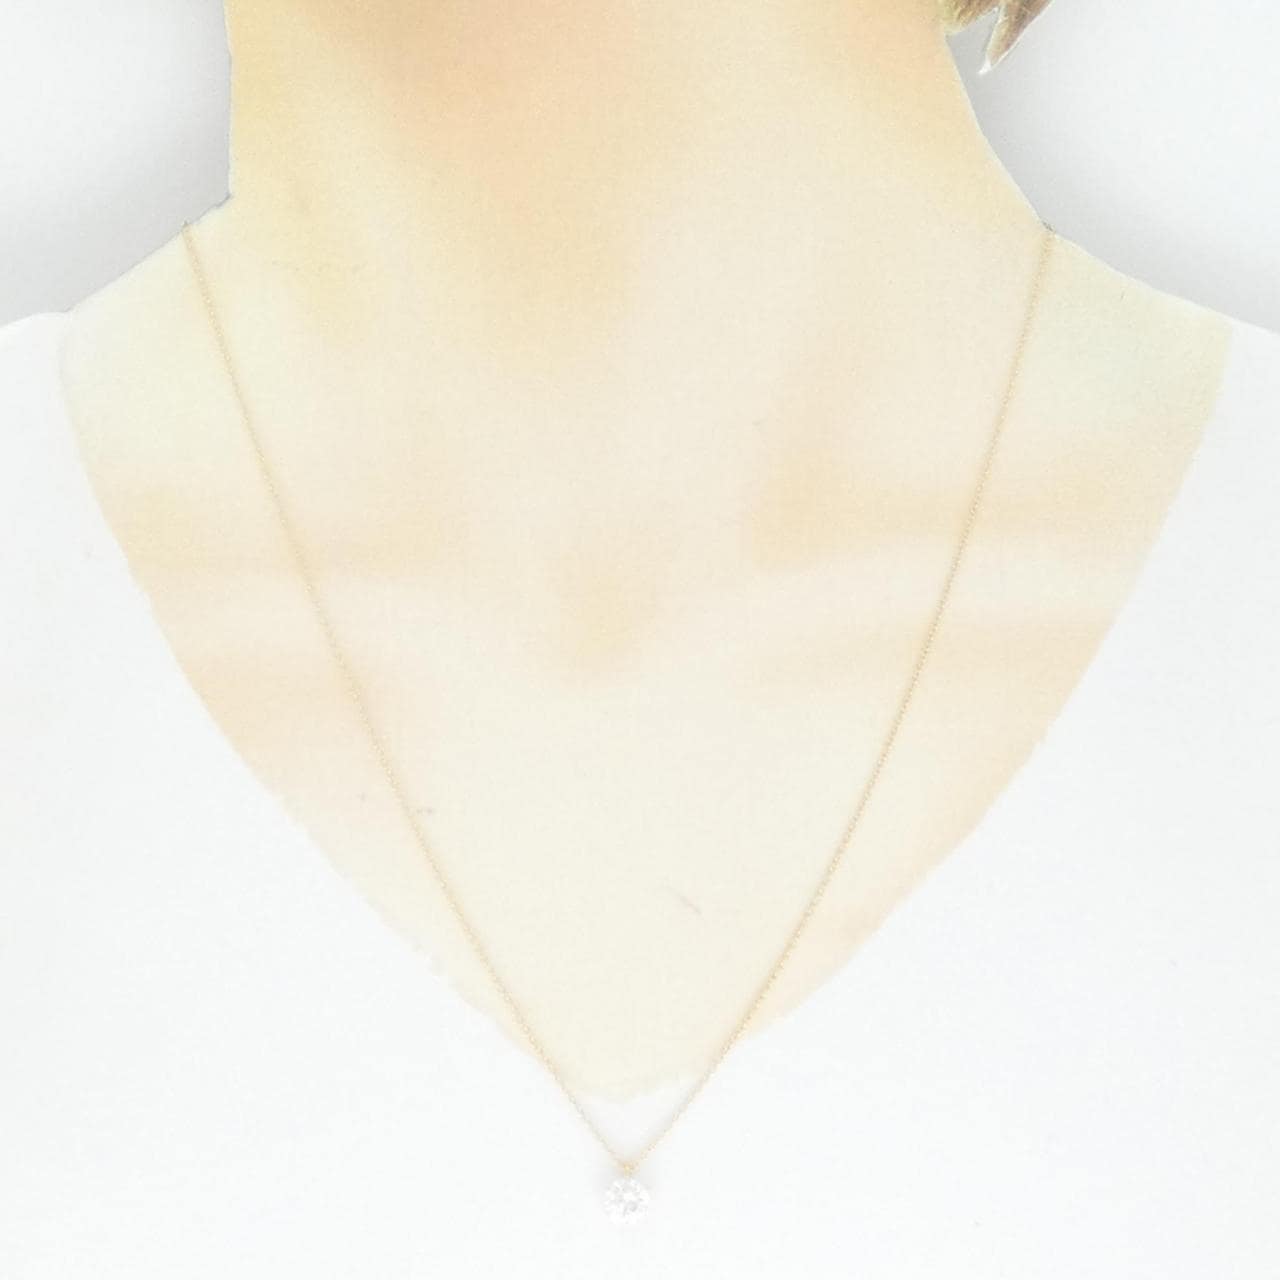 [Remake] K18YG Diamond necklace 0.725CT E SI2 VG